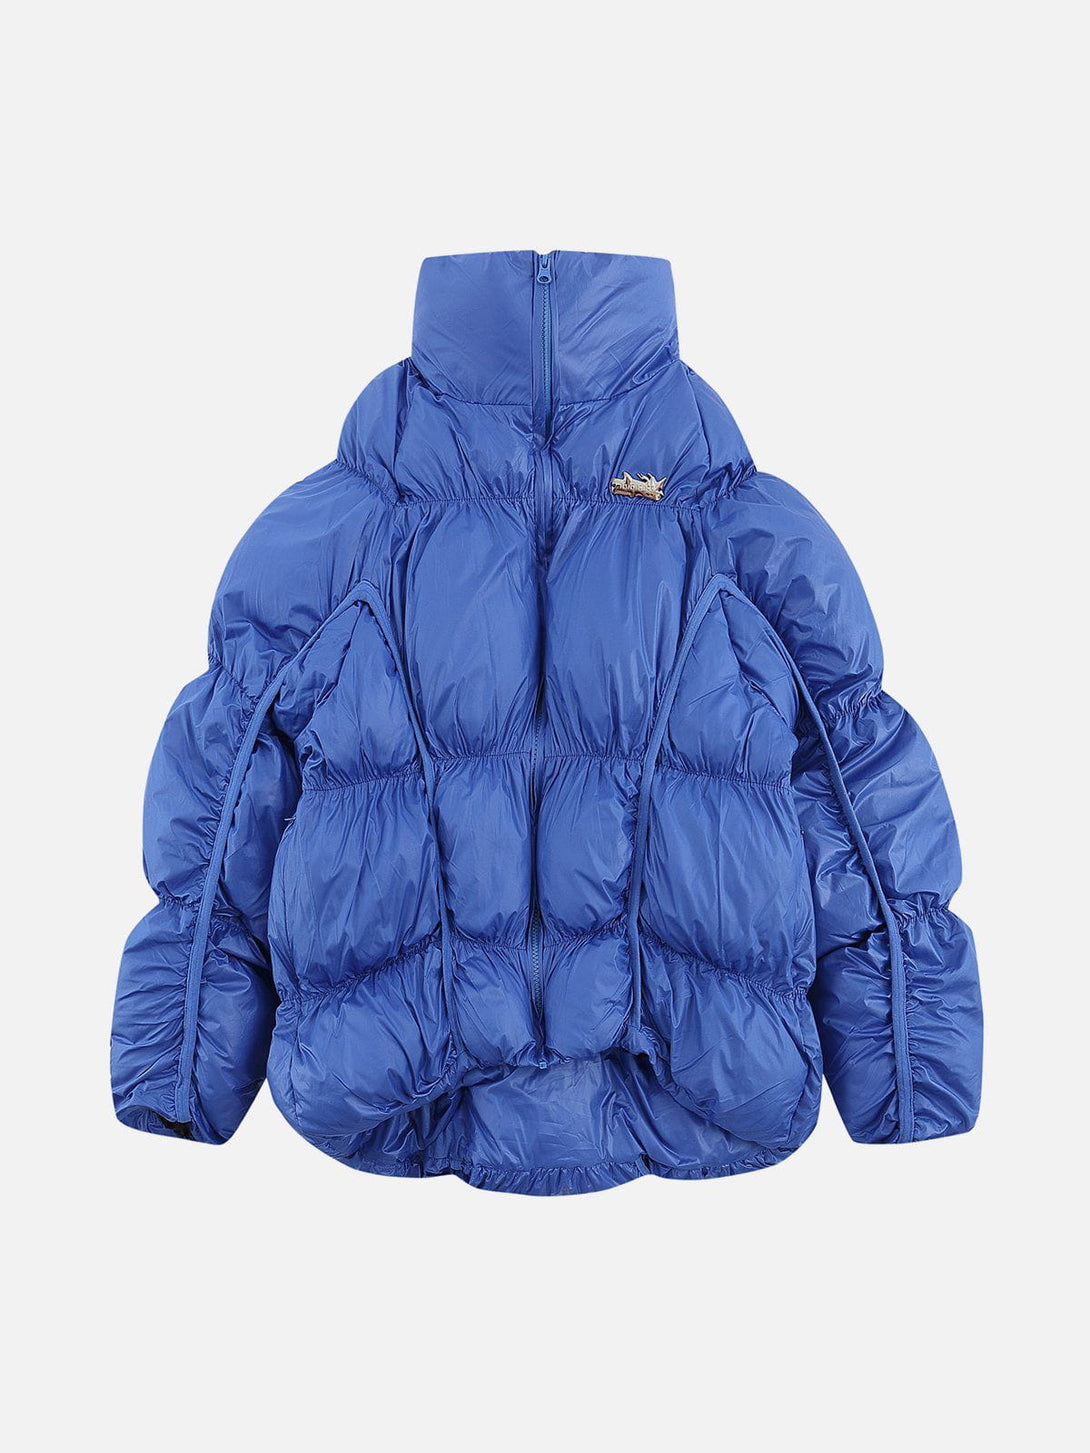 Majesda® - Irregular Split Pleats Winter Coat outfit ideas streetwear fashion